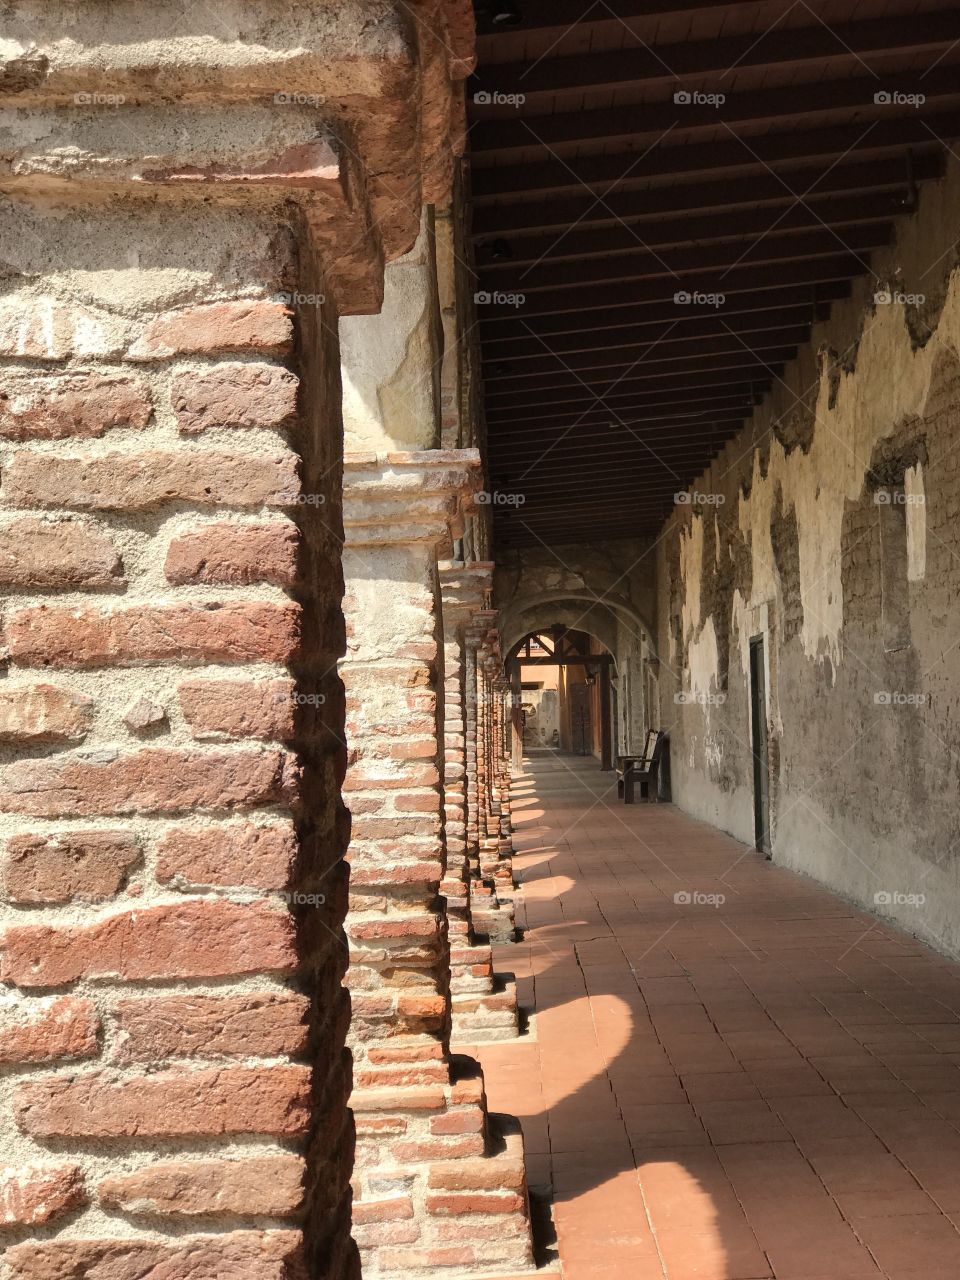 Hallway and arches at Mission San Juan Capistrano.